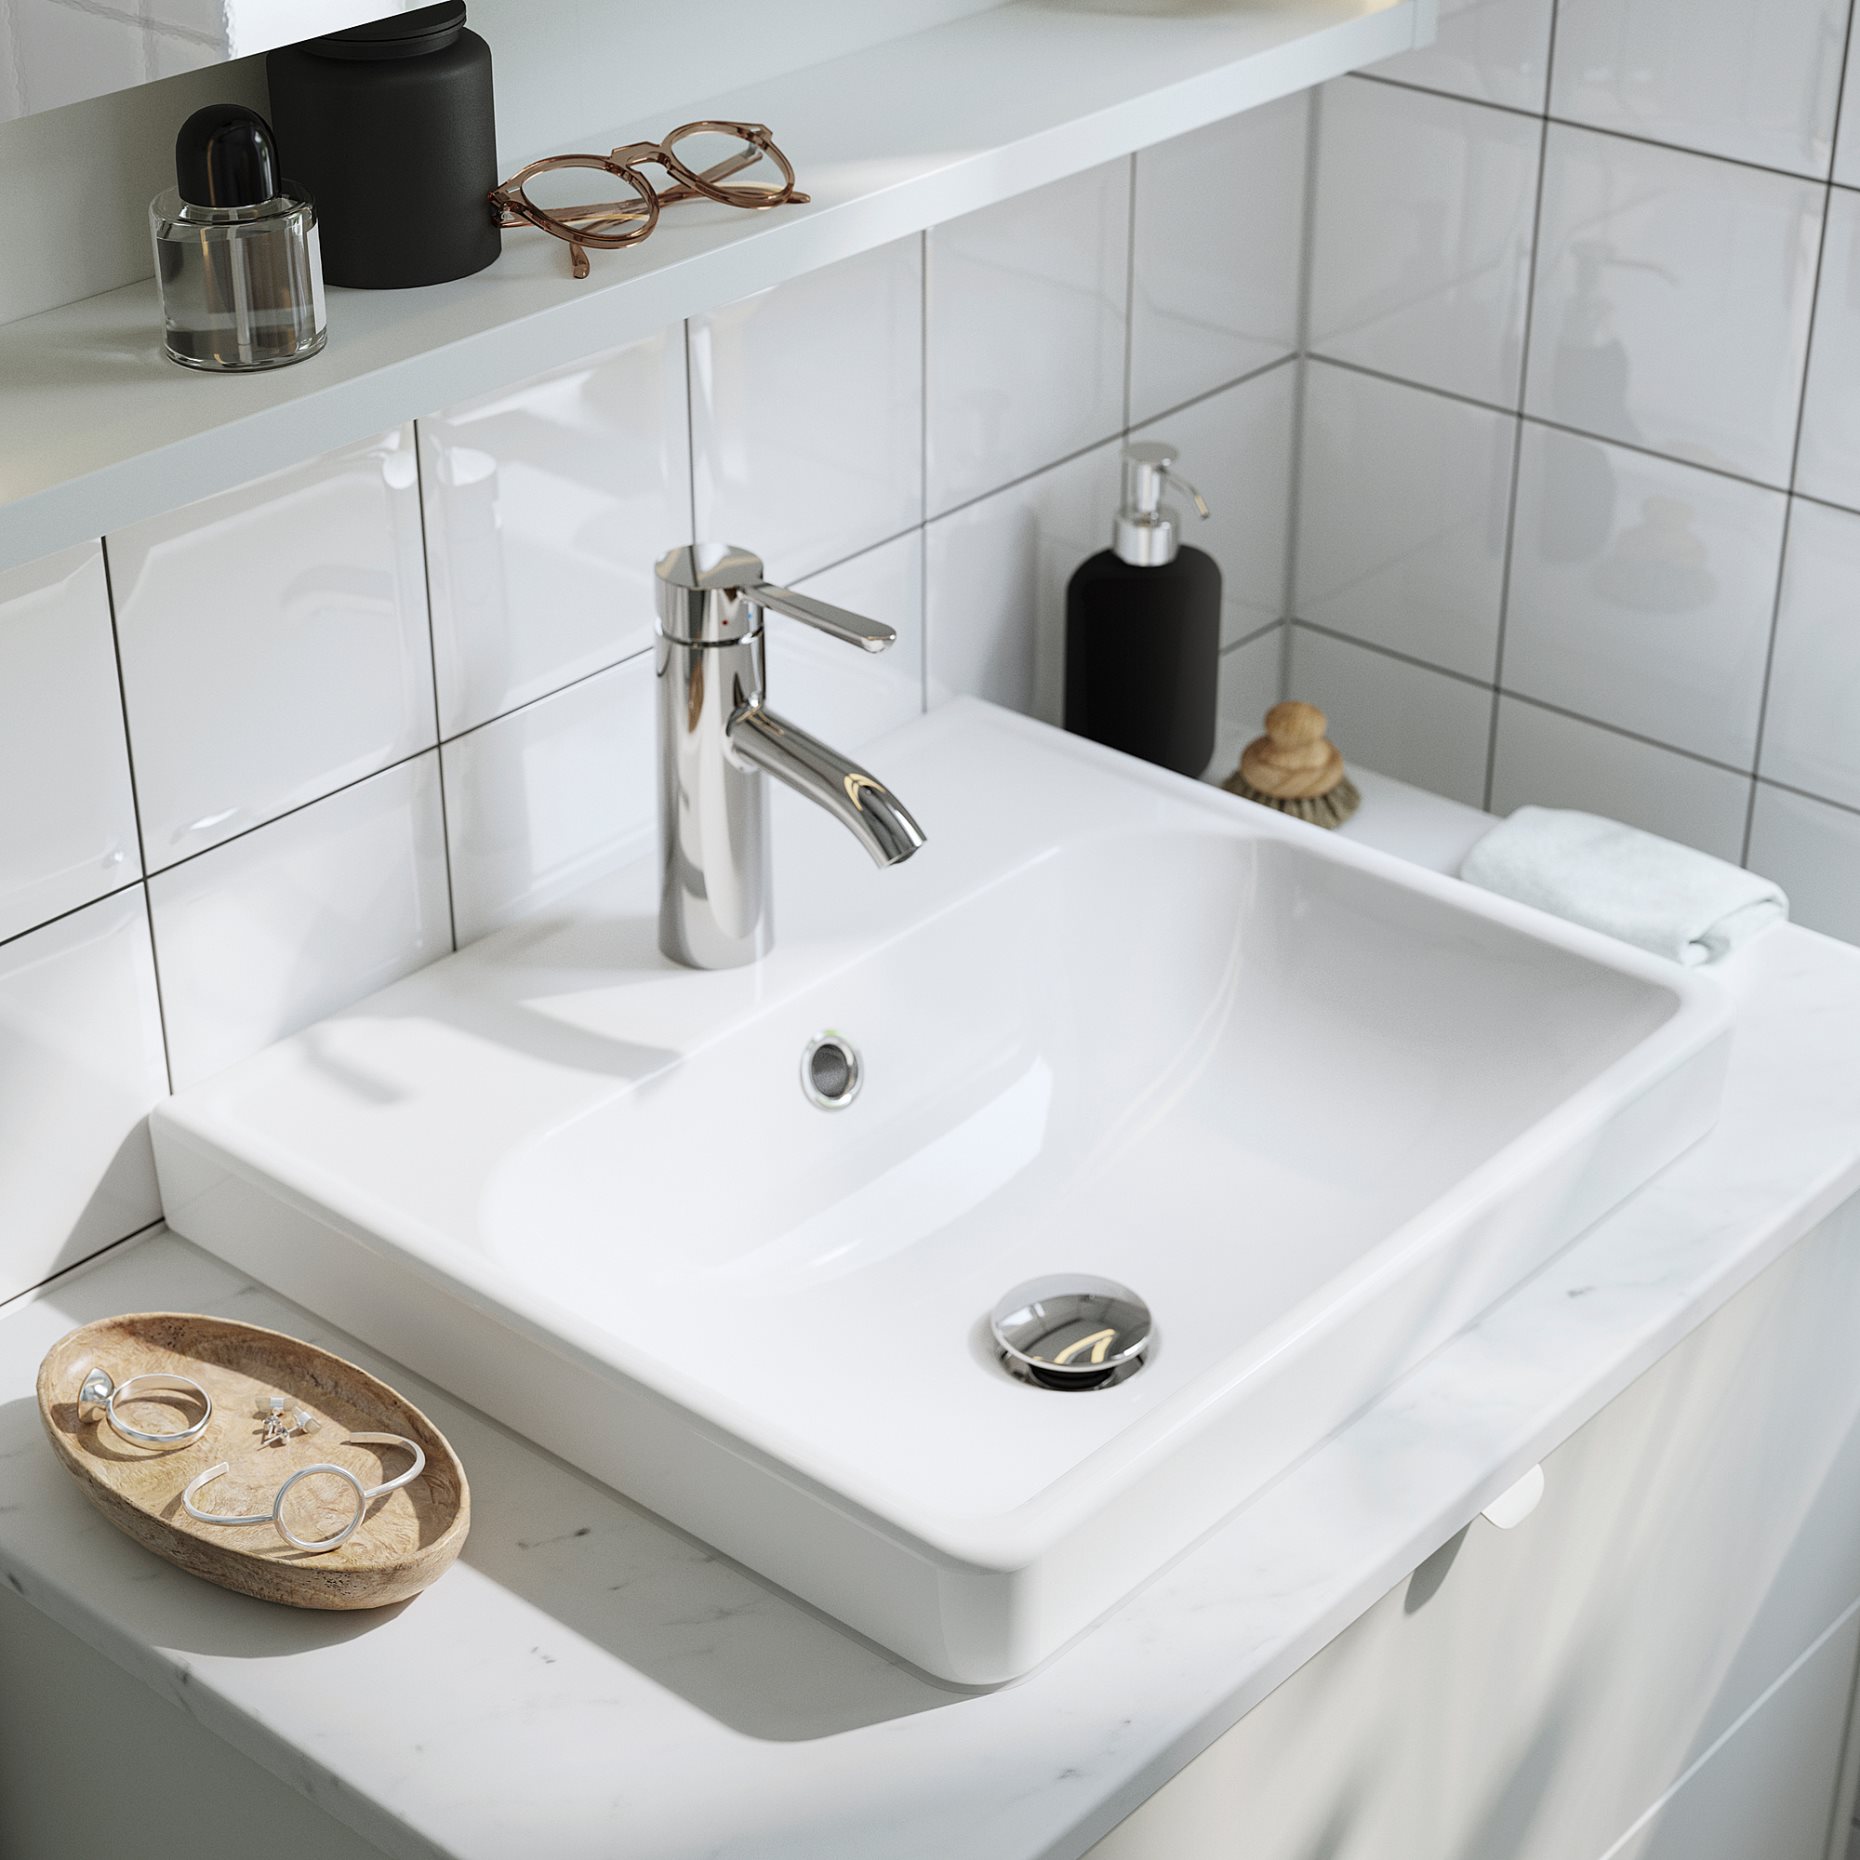 HAVBACK/ORRSJON, wash-stand with drawers/wash-basin/tap, 82x49x71 cm, 795.213.75